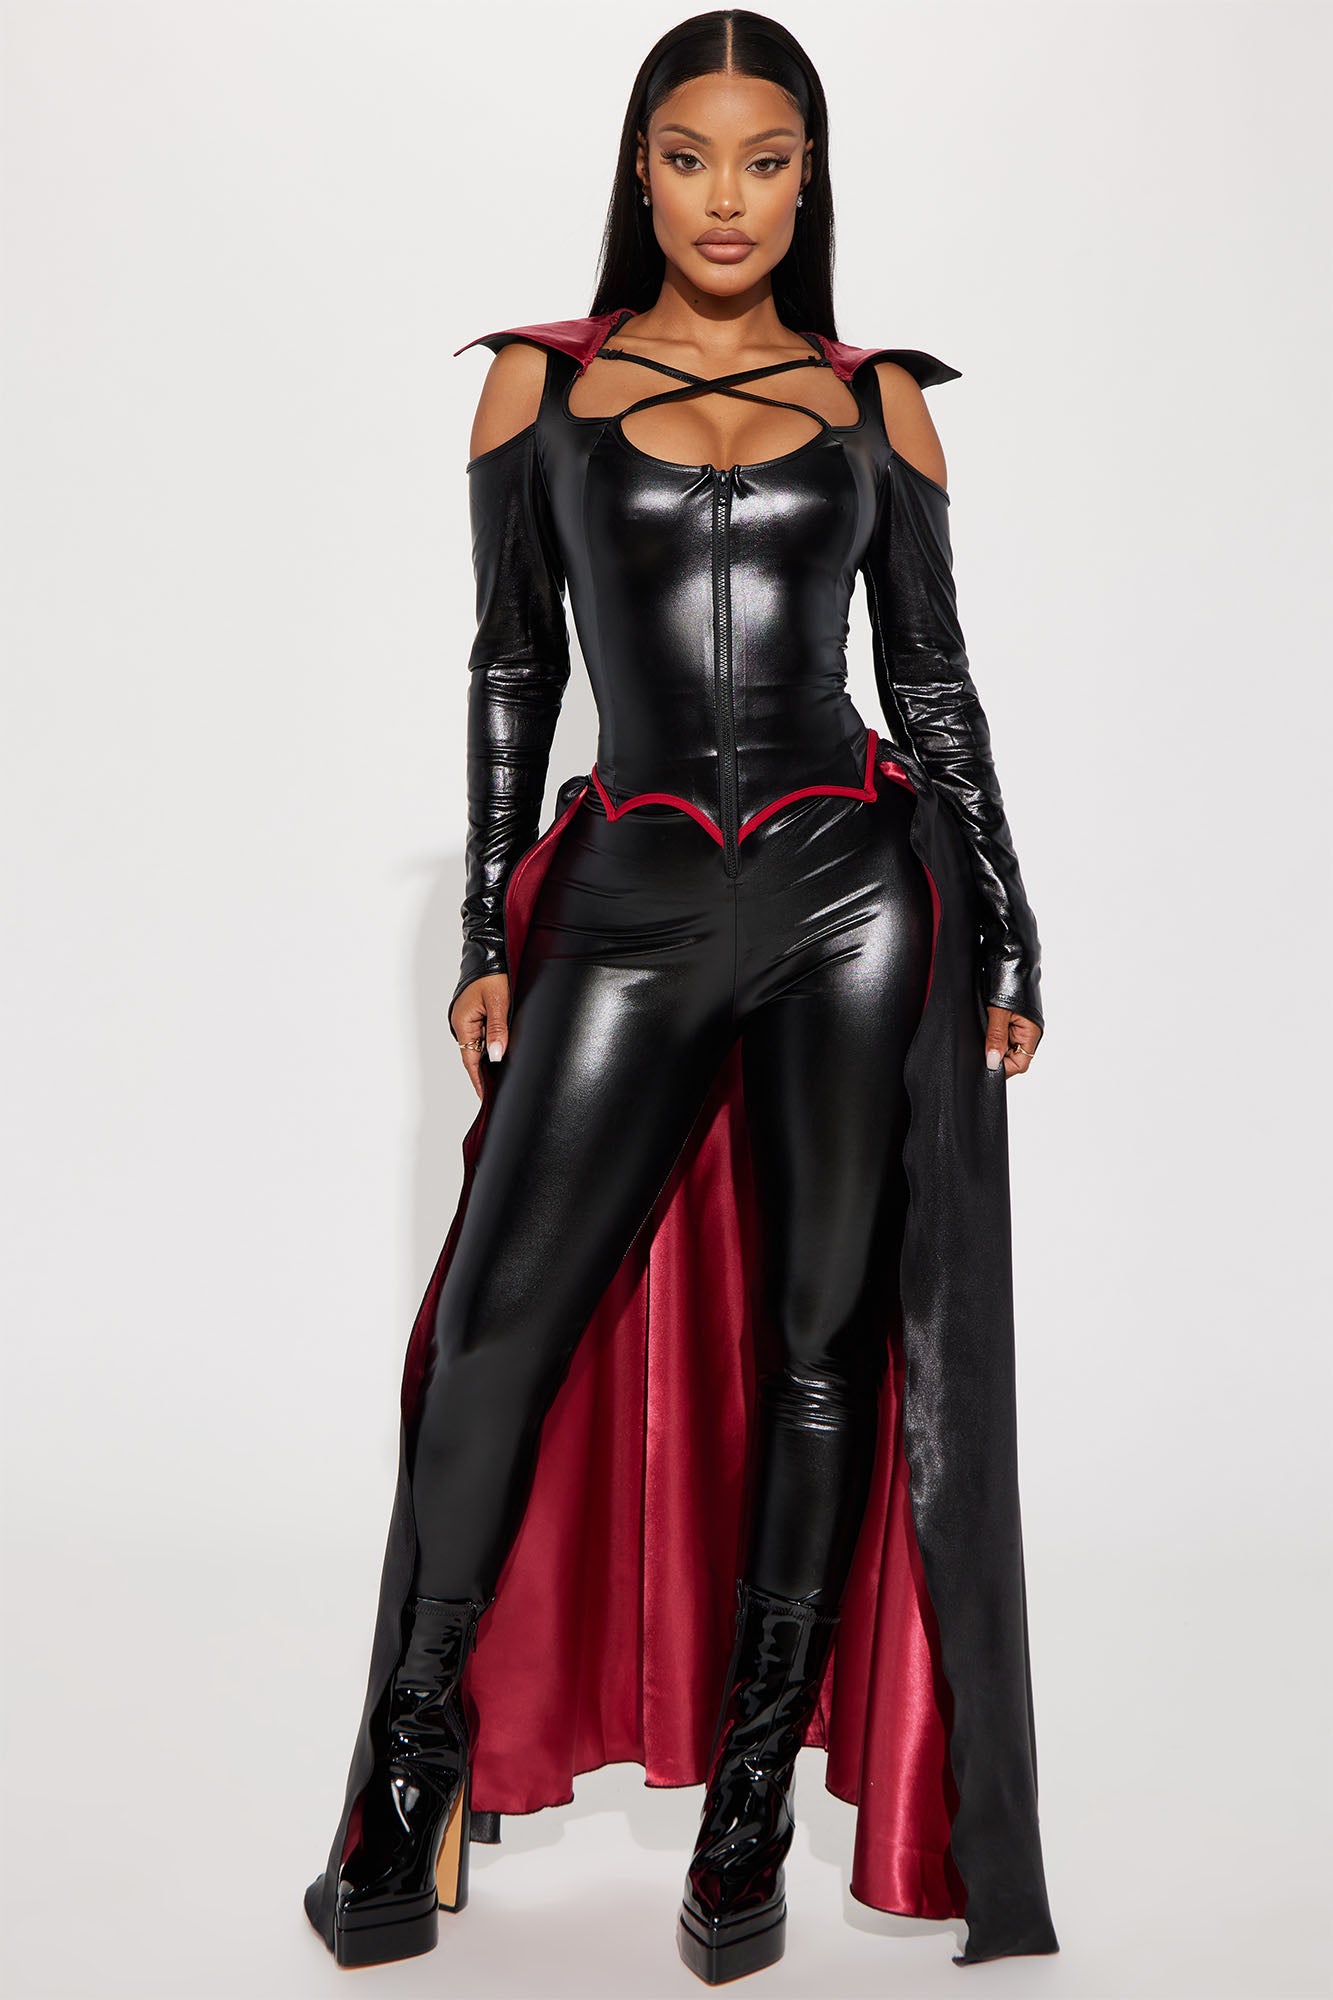 Vampire Vixen Costume